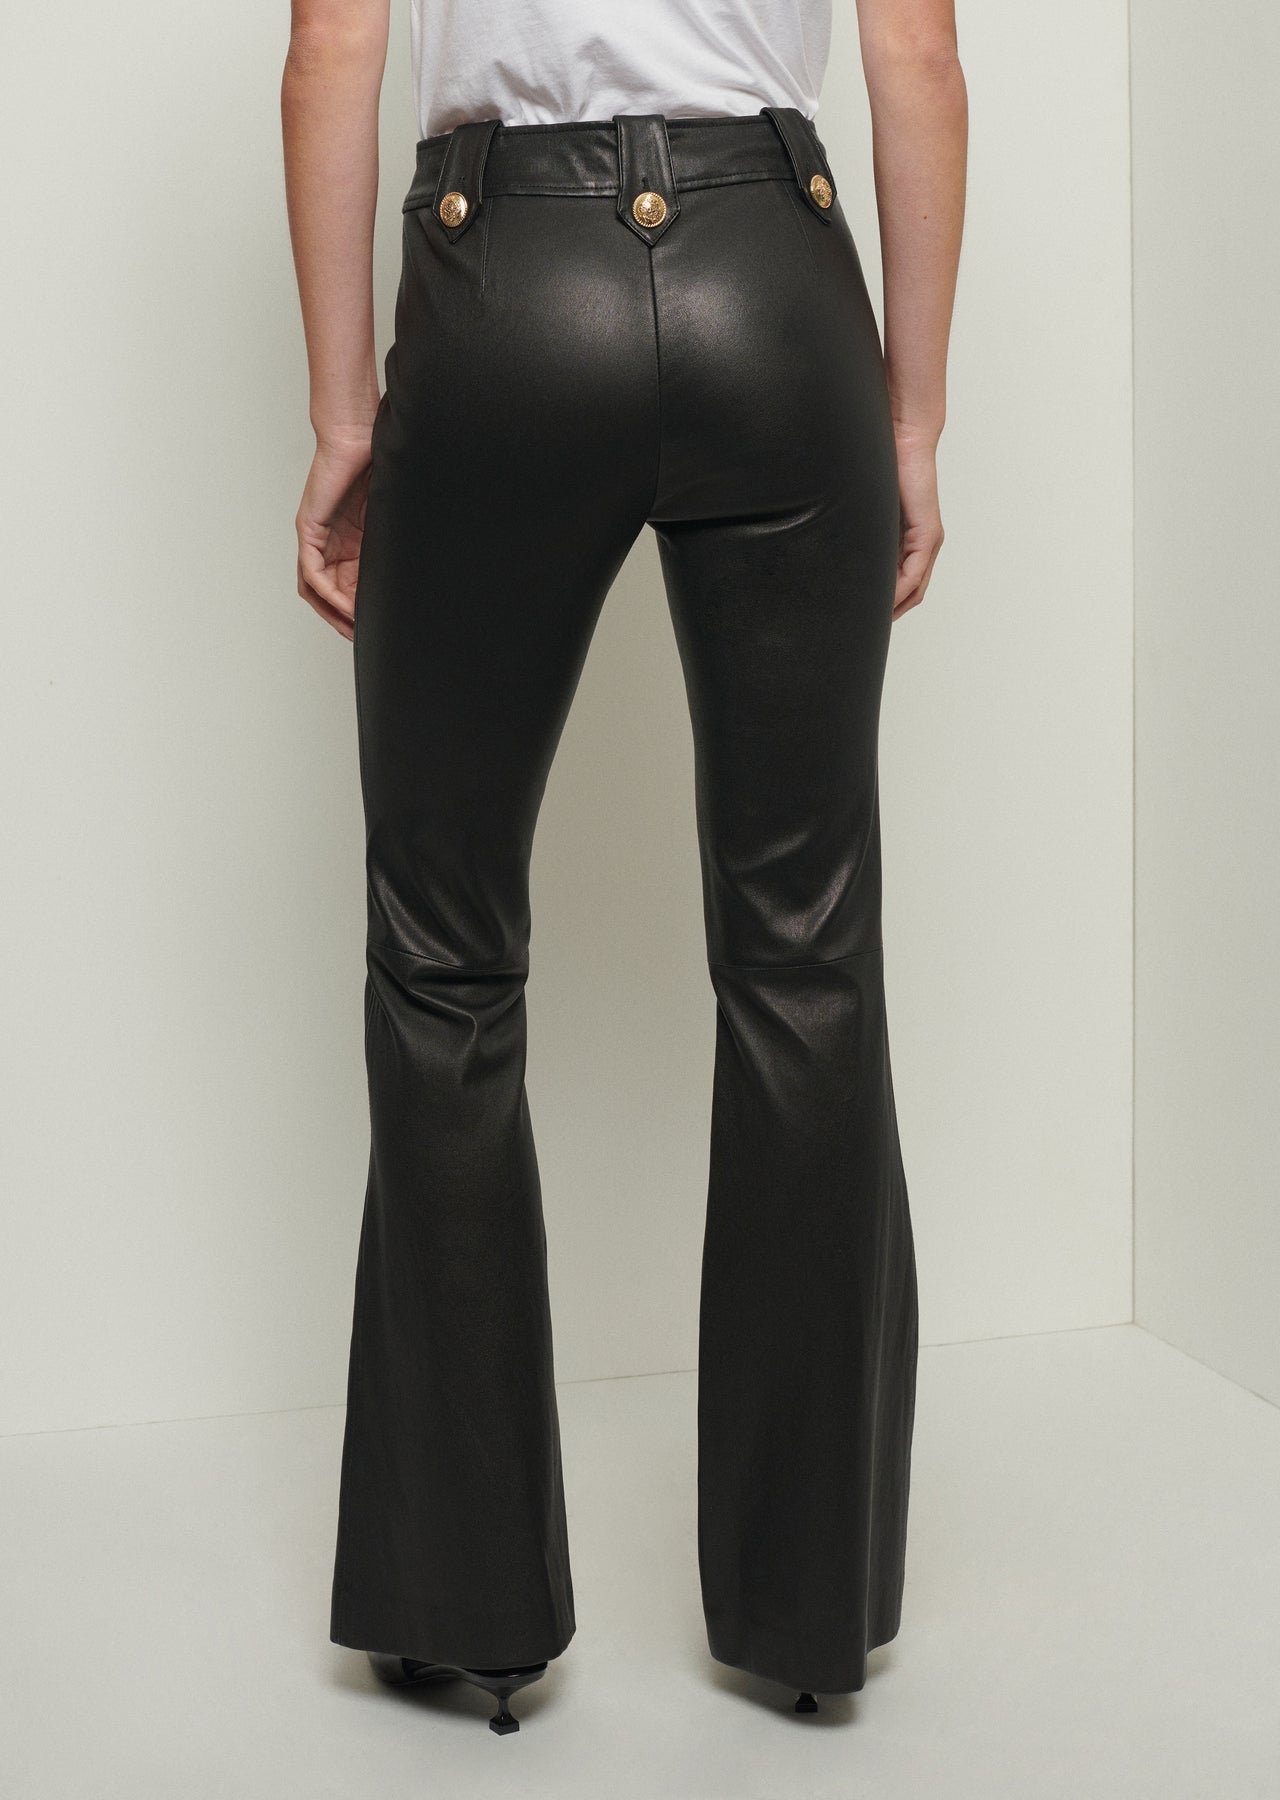 Robertson Flare Trousers - 8 / Black - Pants